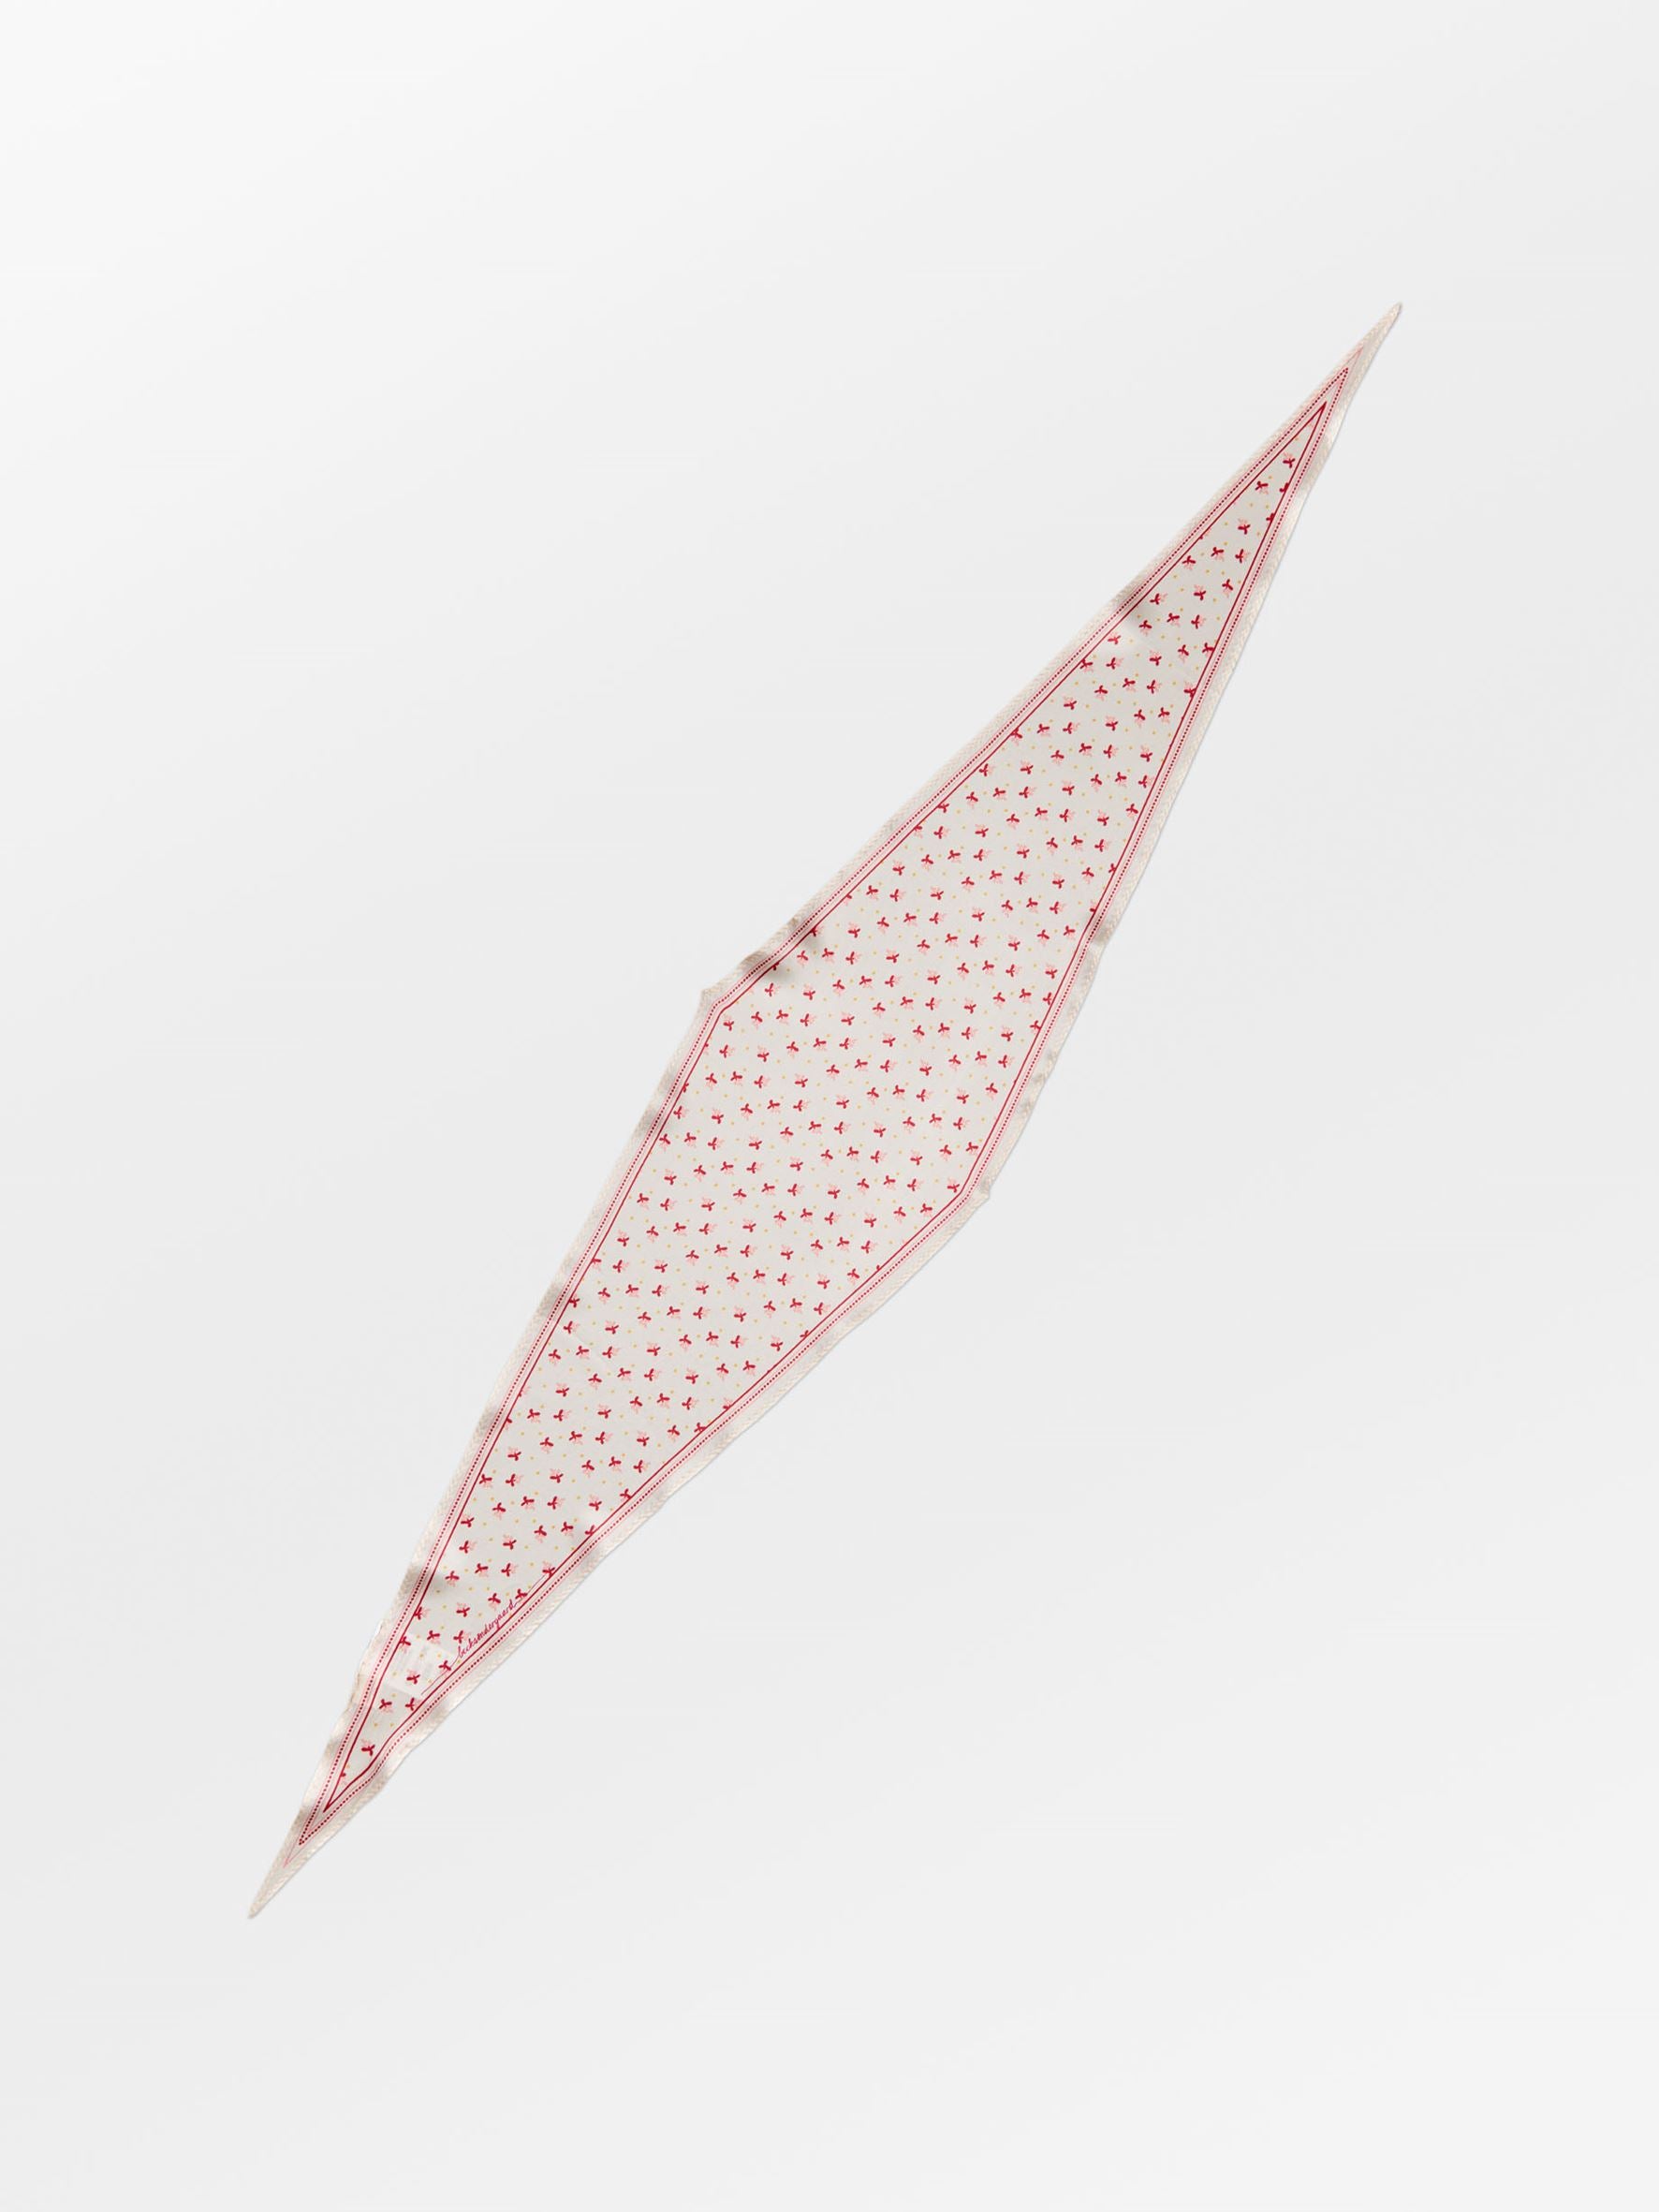 Becksöndergaard, Halia Diamond Scarf - Pink Icing, scarves, scarves, scarves